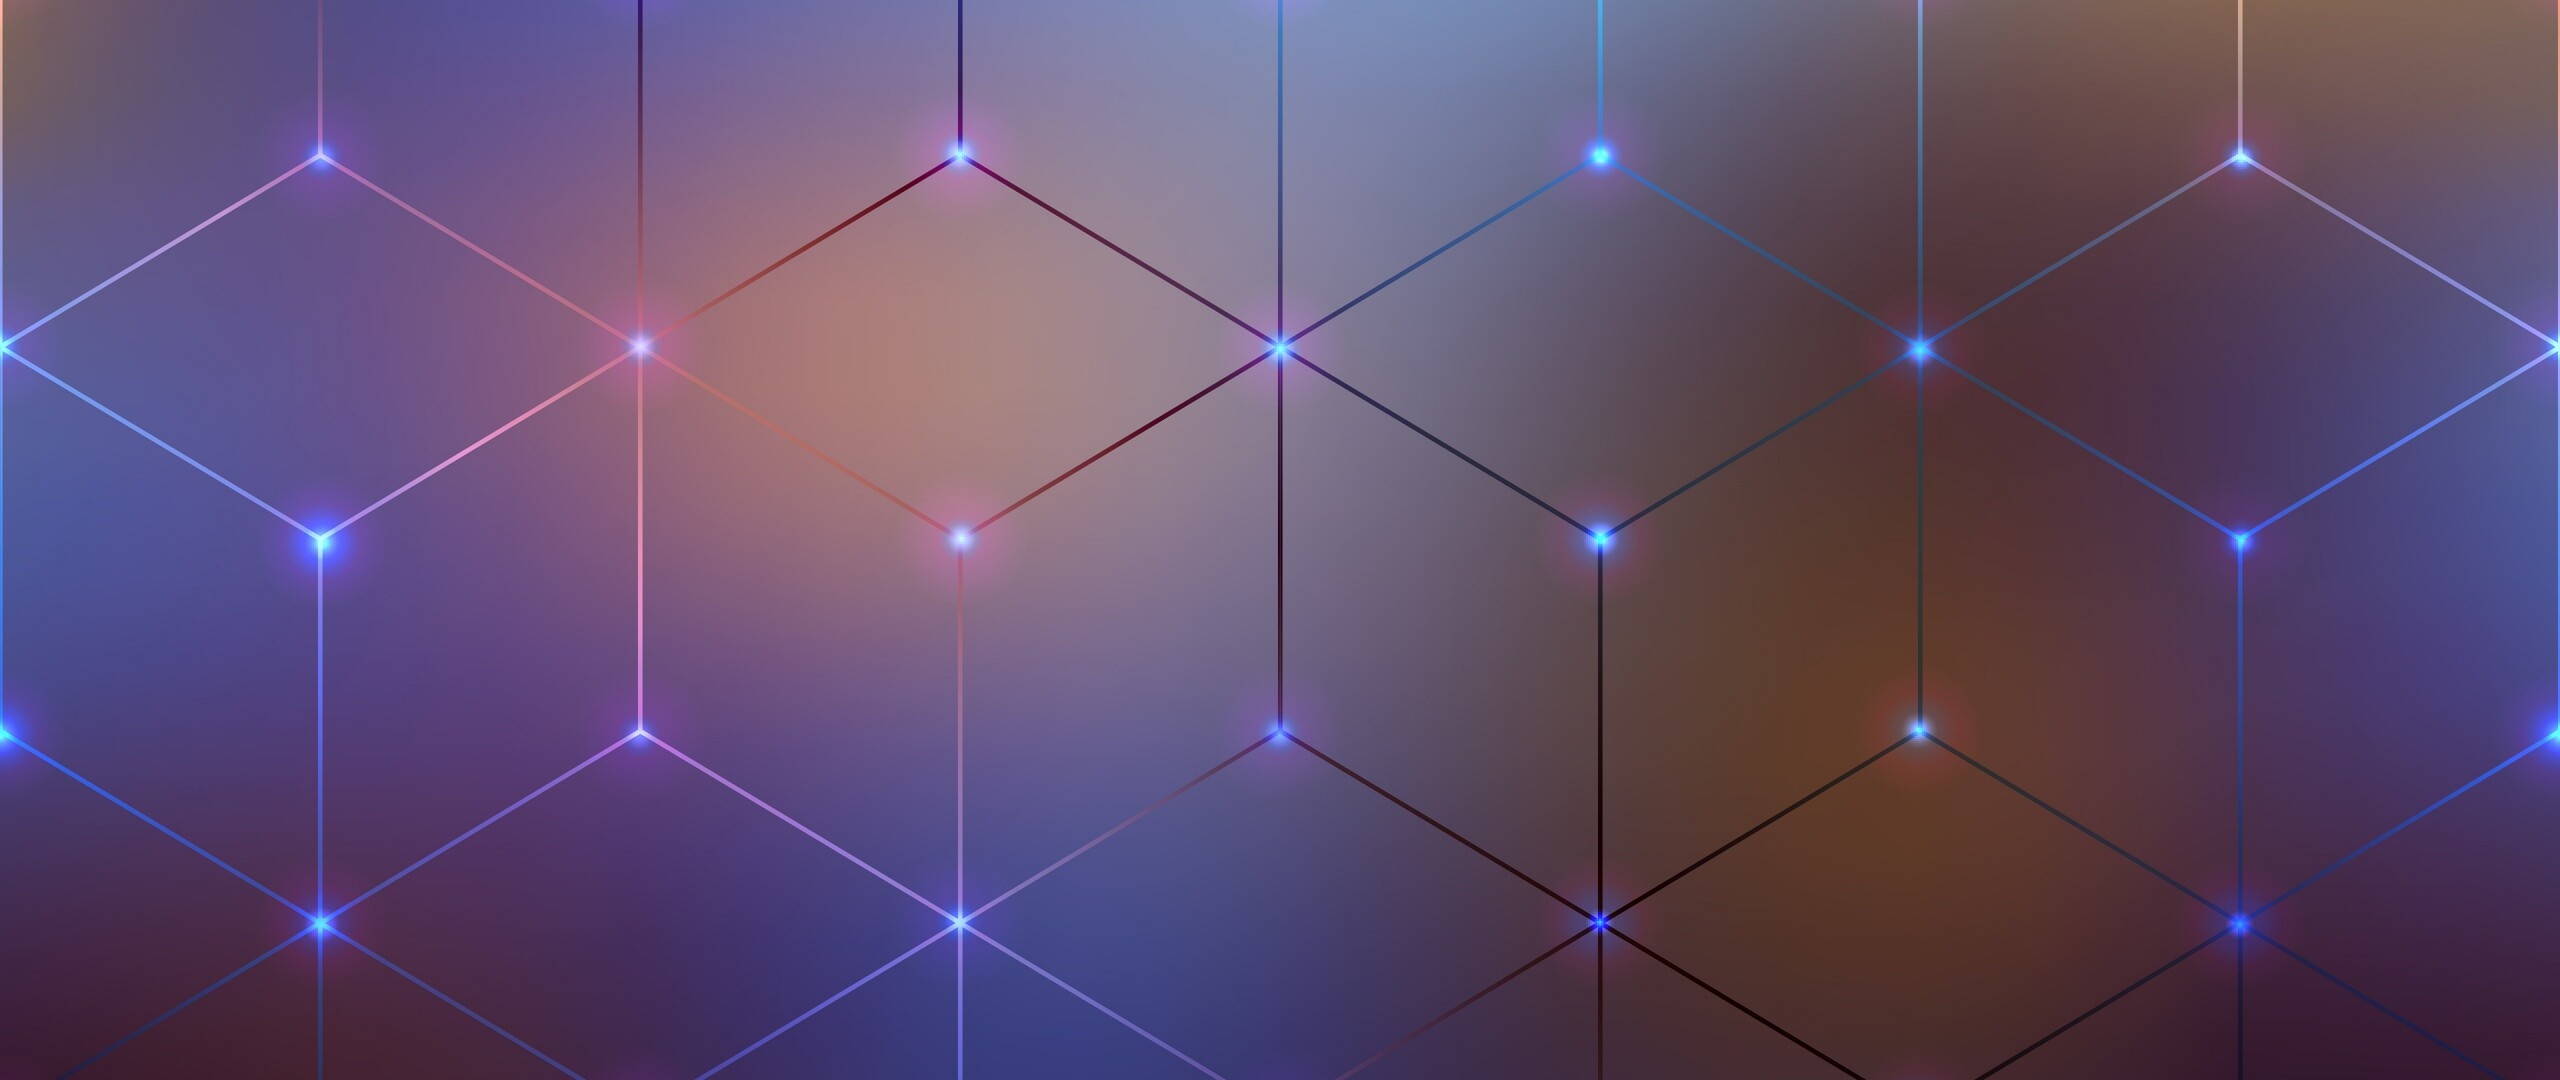 Geometric Abstract: Polygons, Blur, Connected dots, Hexagons, Vertex. 2560x1080 Dual Screen Wallpaper.